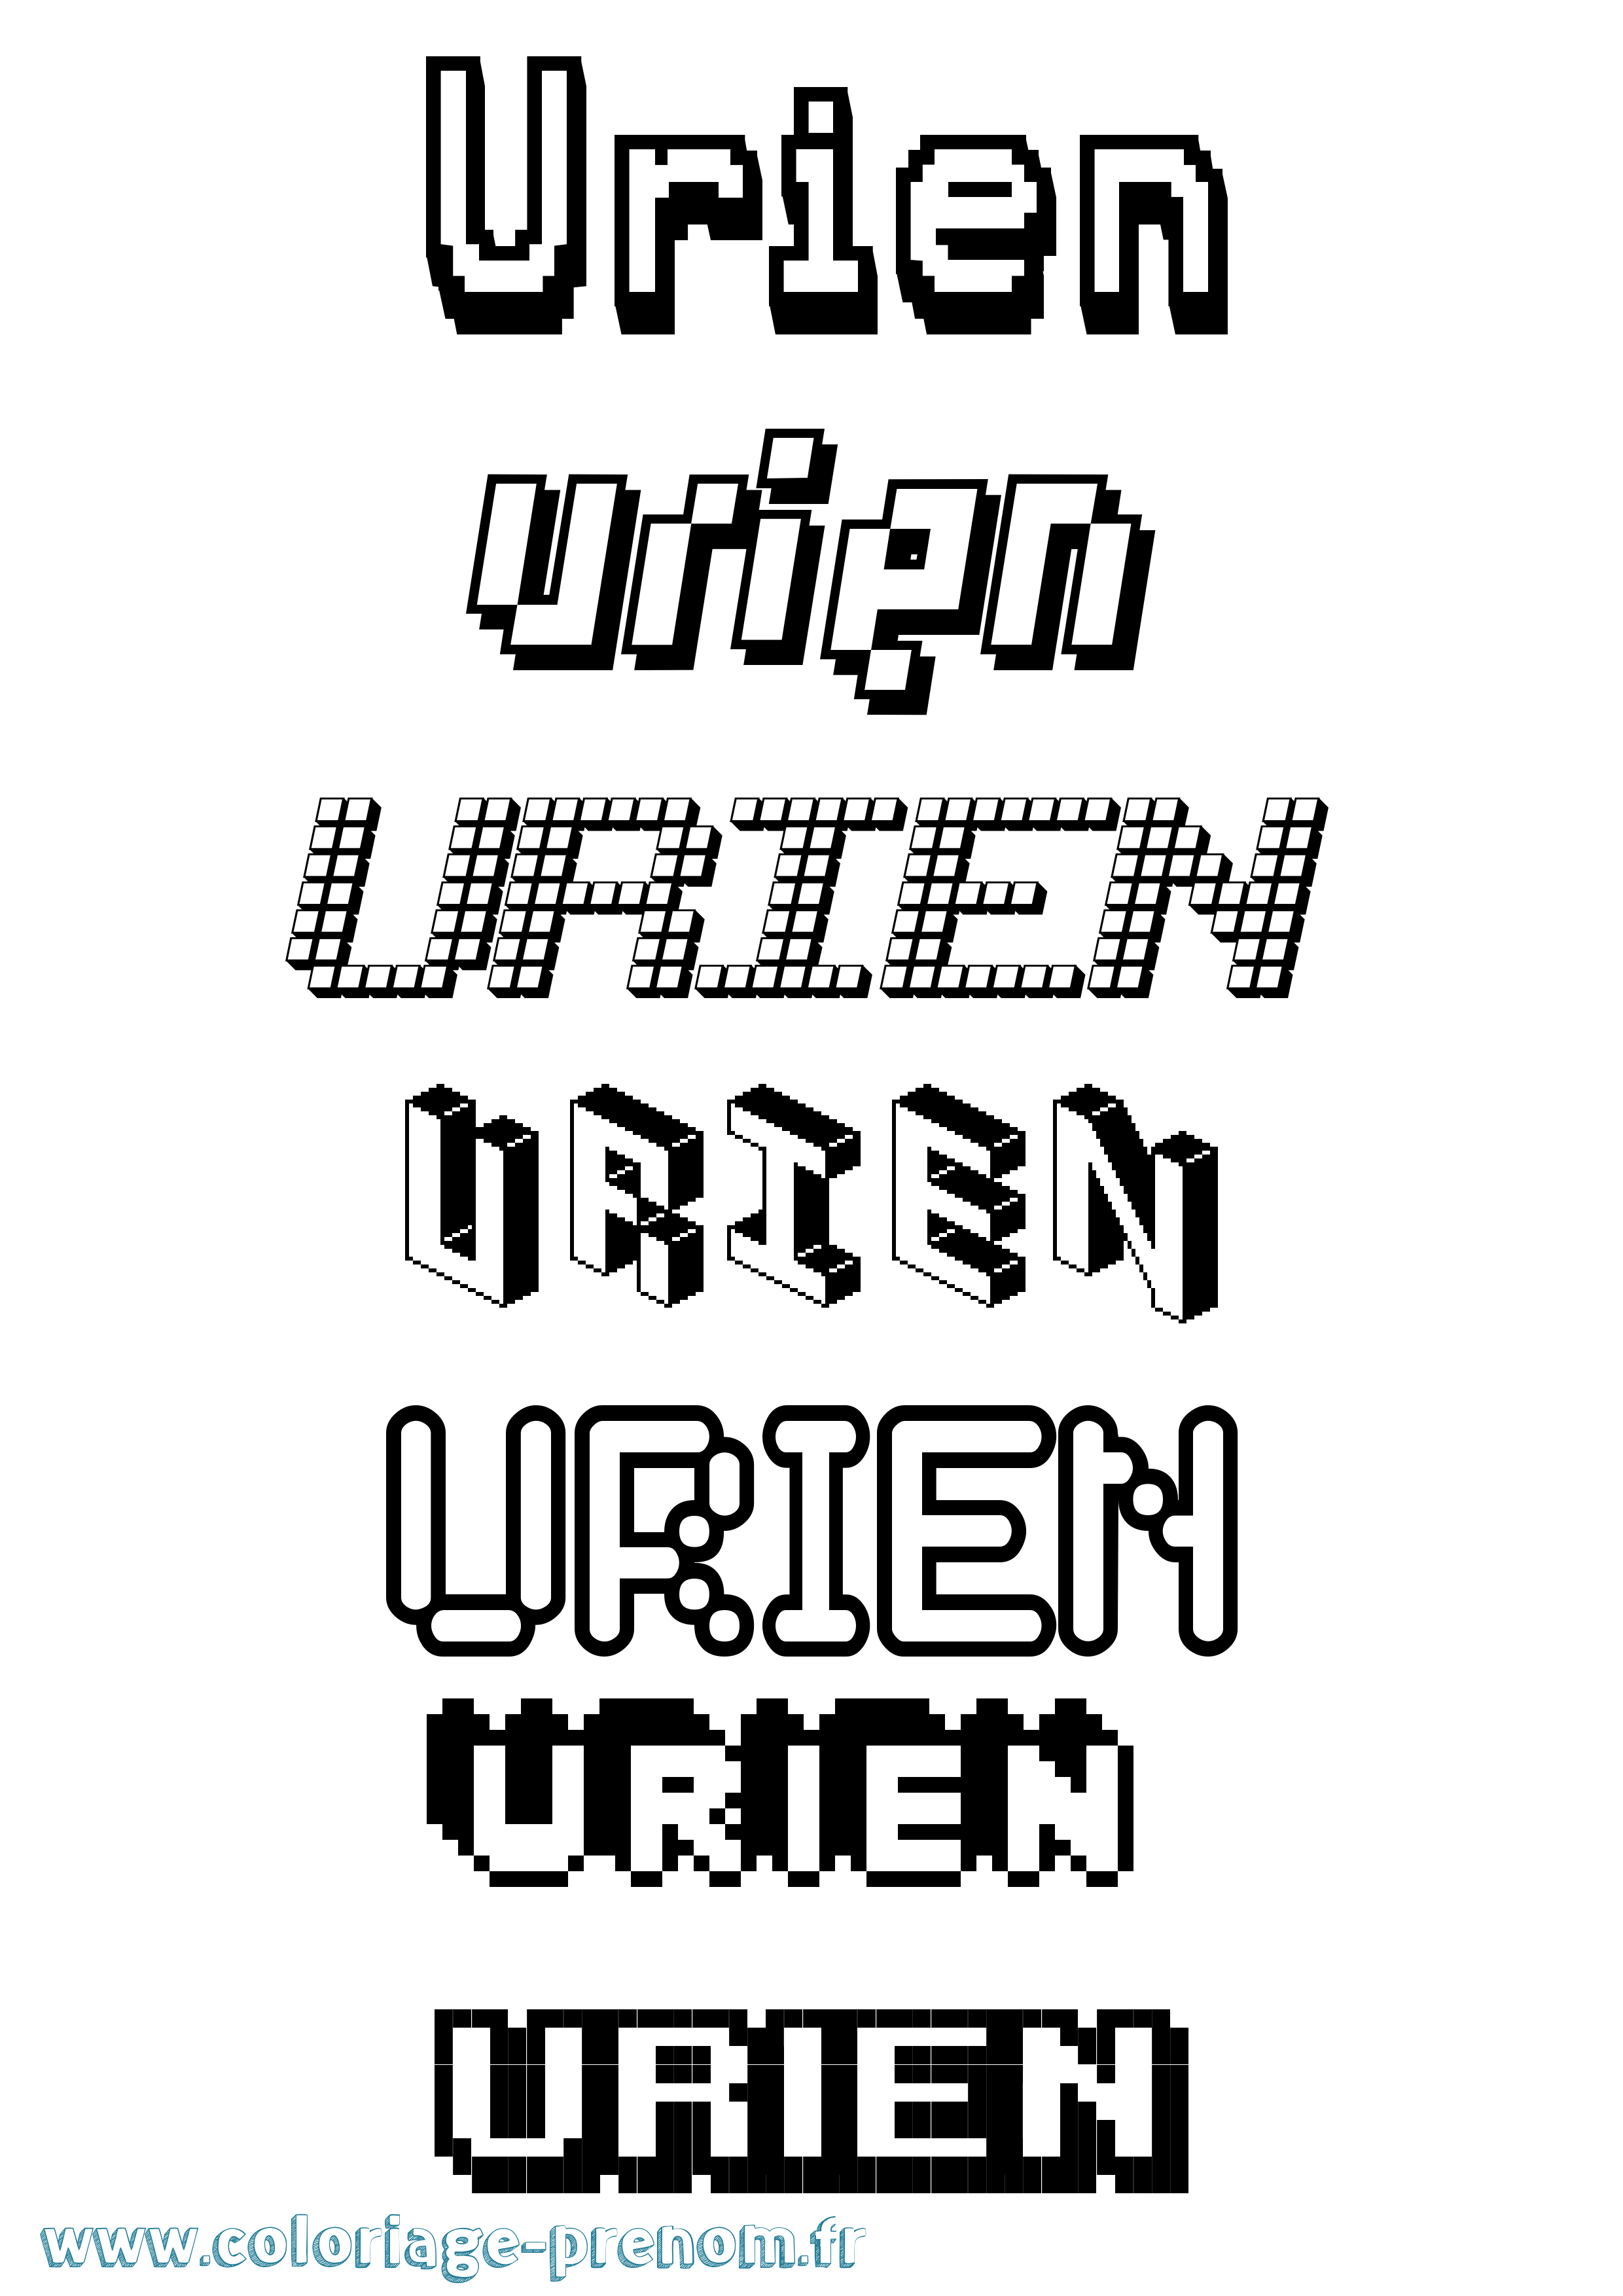 Coloriage prénom Urien Pixel